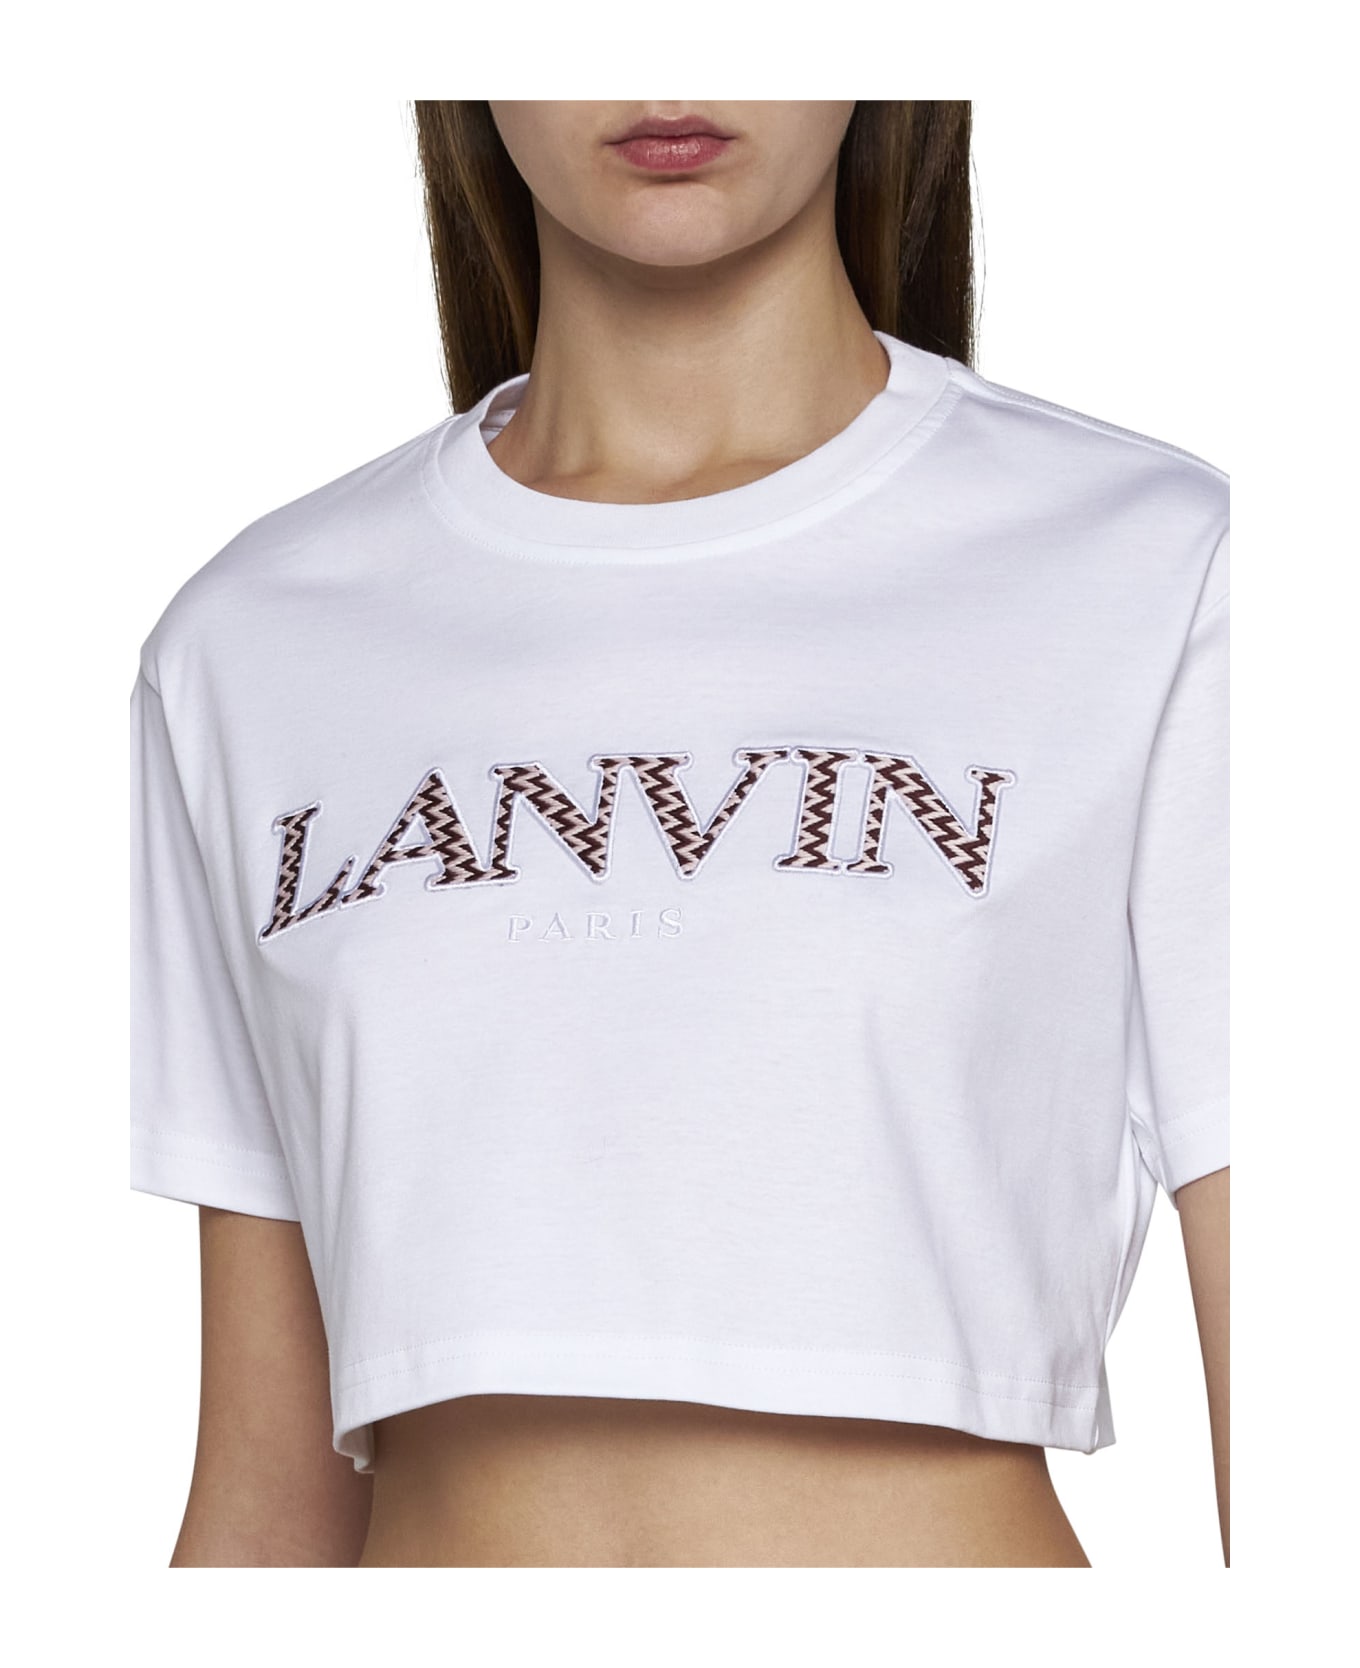 Lanvin T-Shirt - Optic white Tシャツ